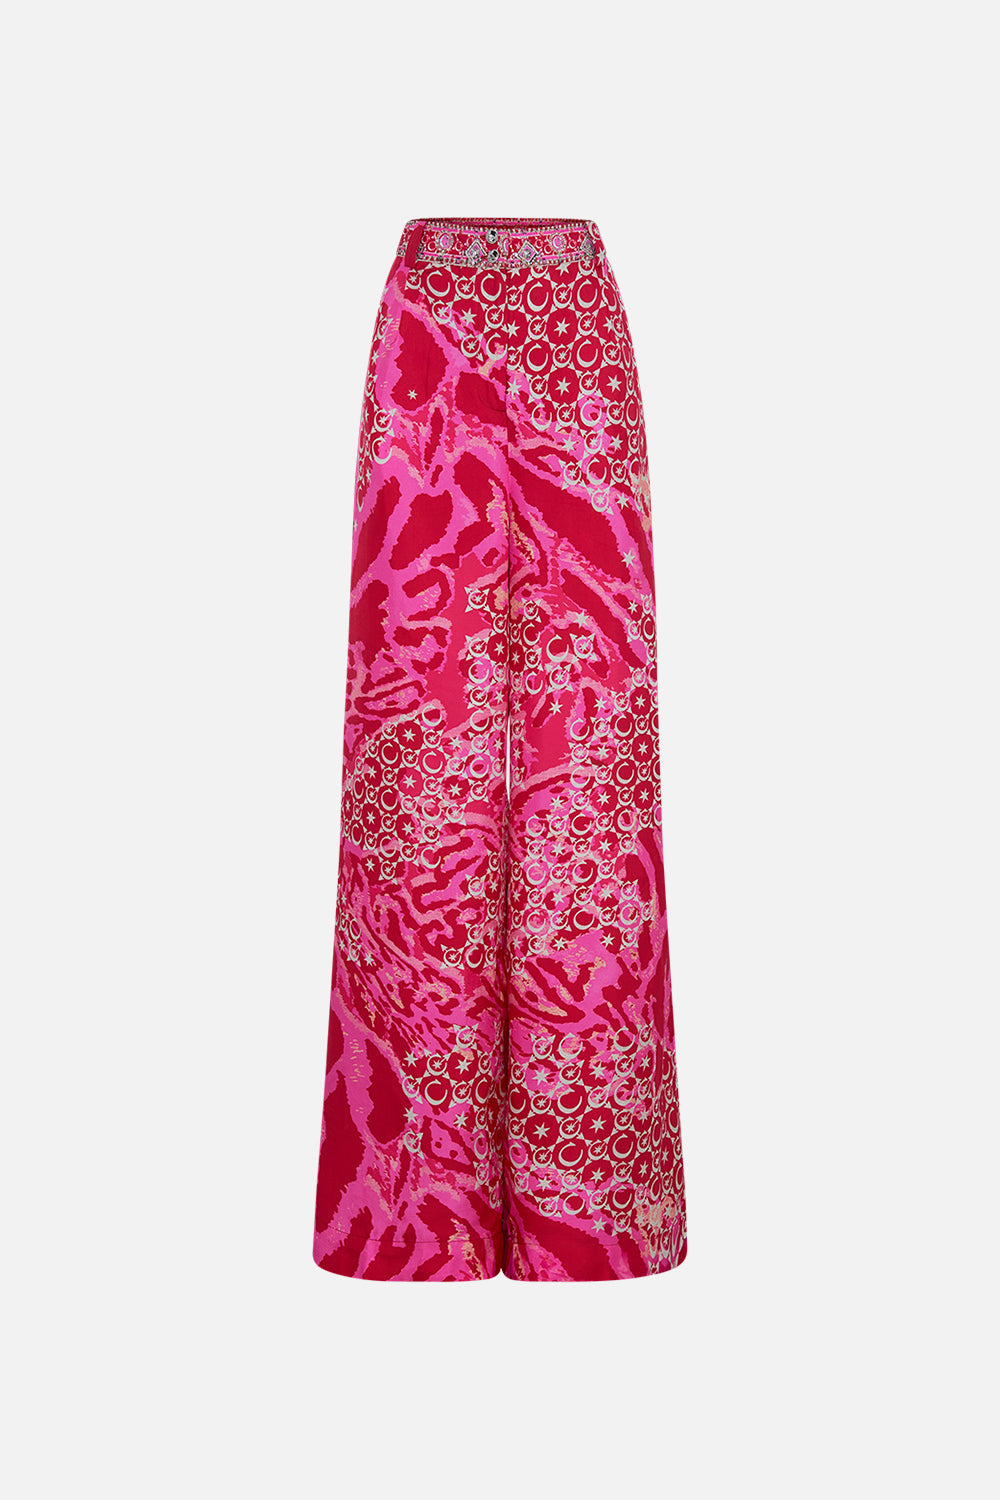 Product view of CAMILLA silk palazzo pants in Song Of Sacrifice print